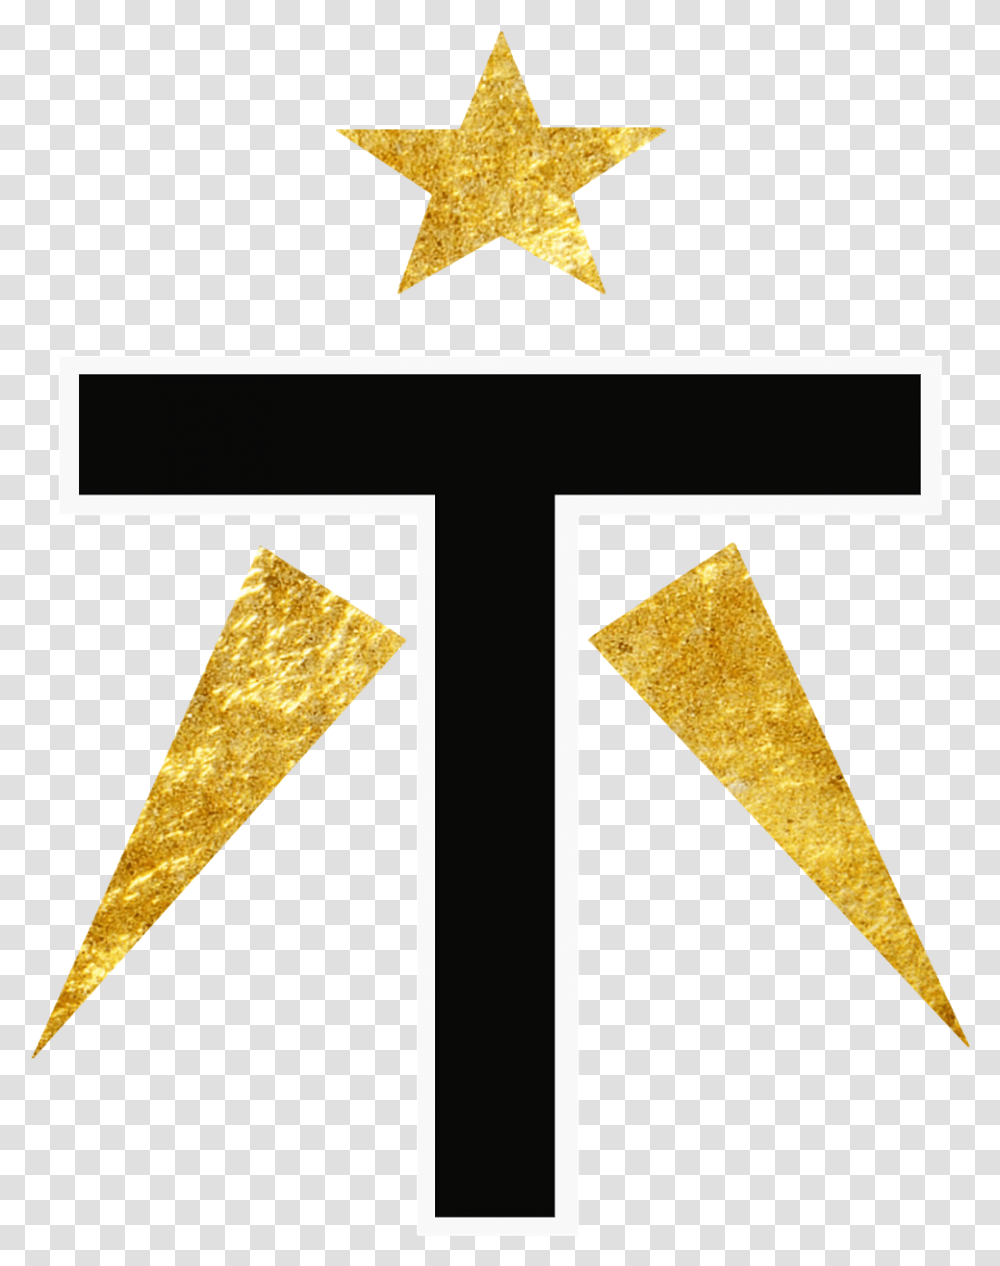 Dj Khaled Triangle, Cross, Star Symbol, Cone Transparent Png